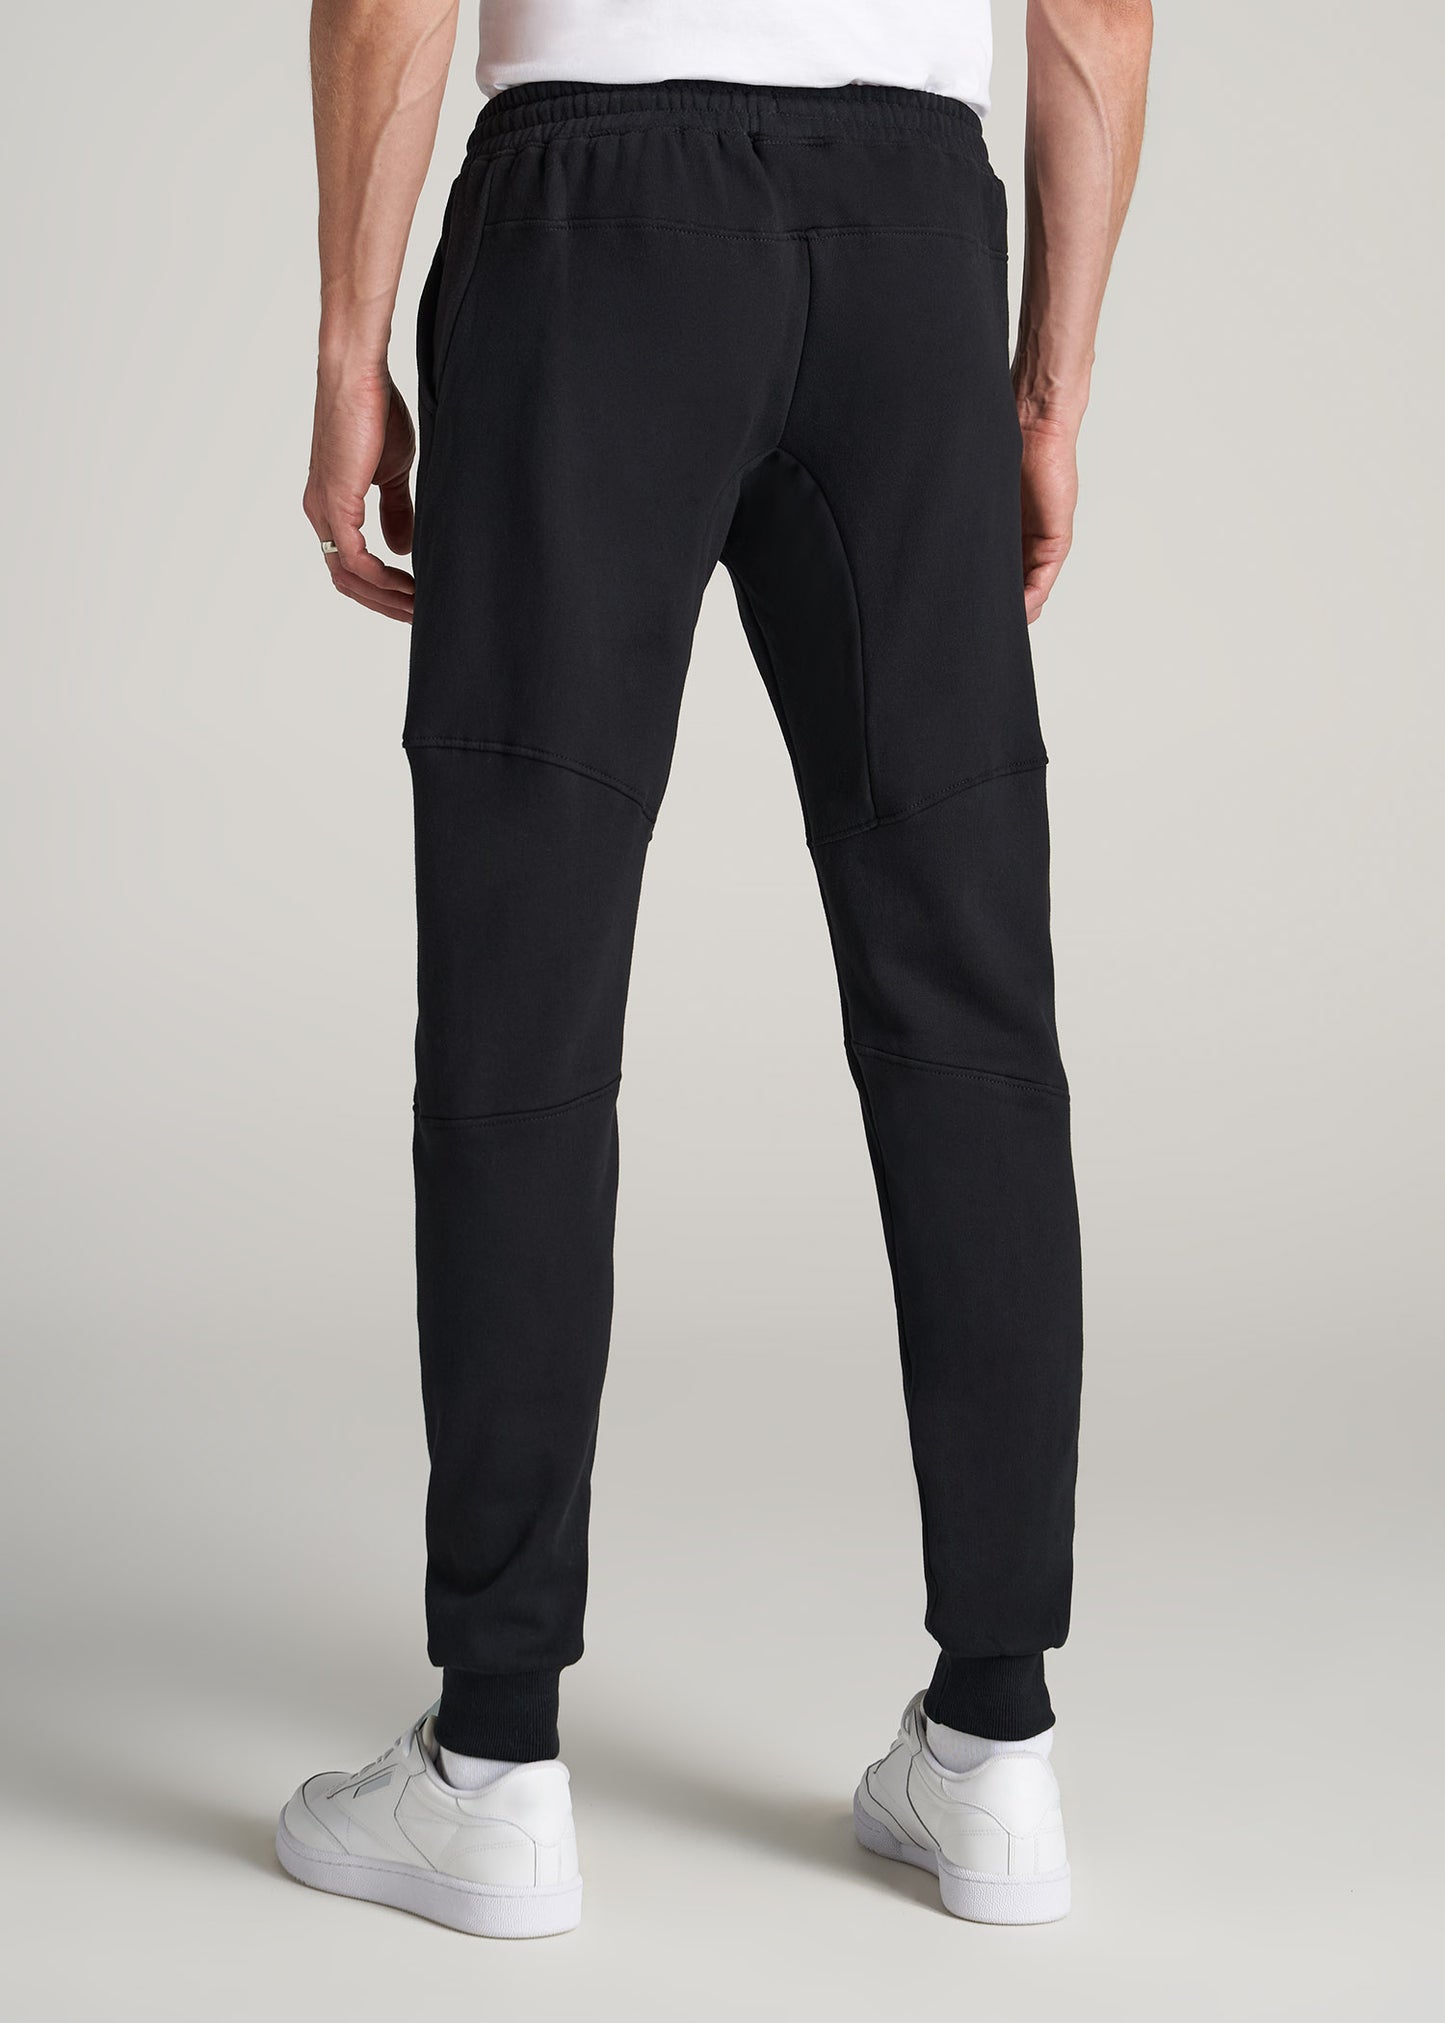 Men's Lightweight Fleece Sweatpants (2XL, Black) 